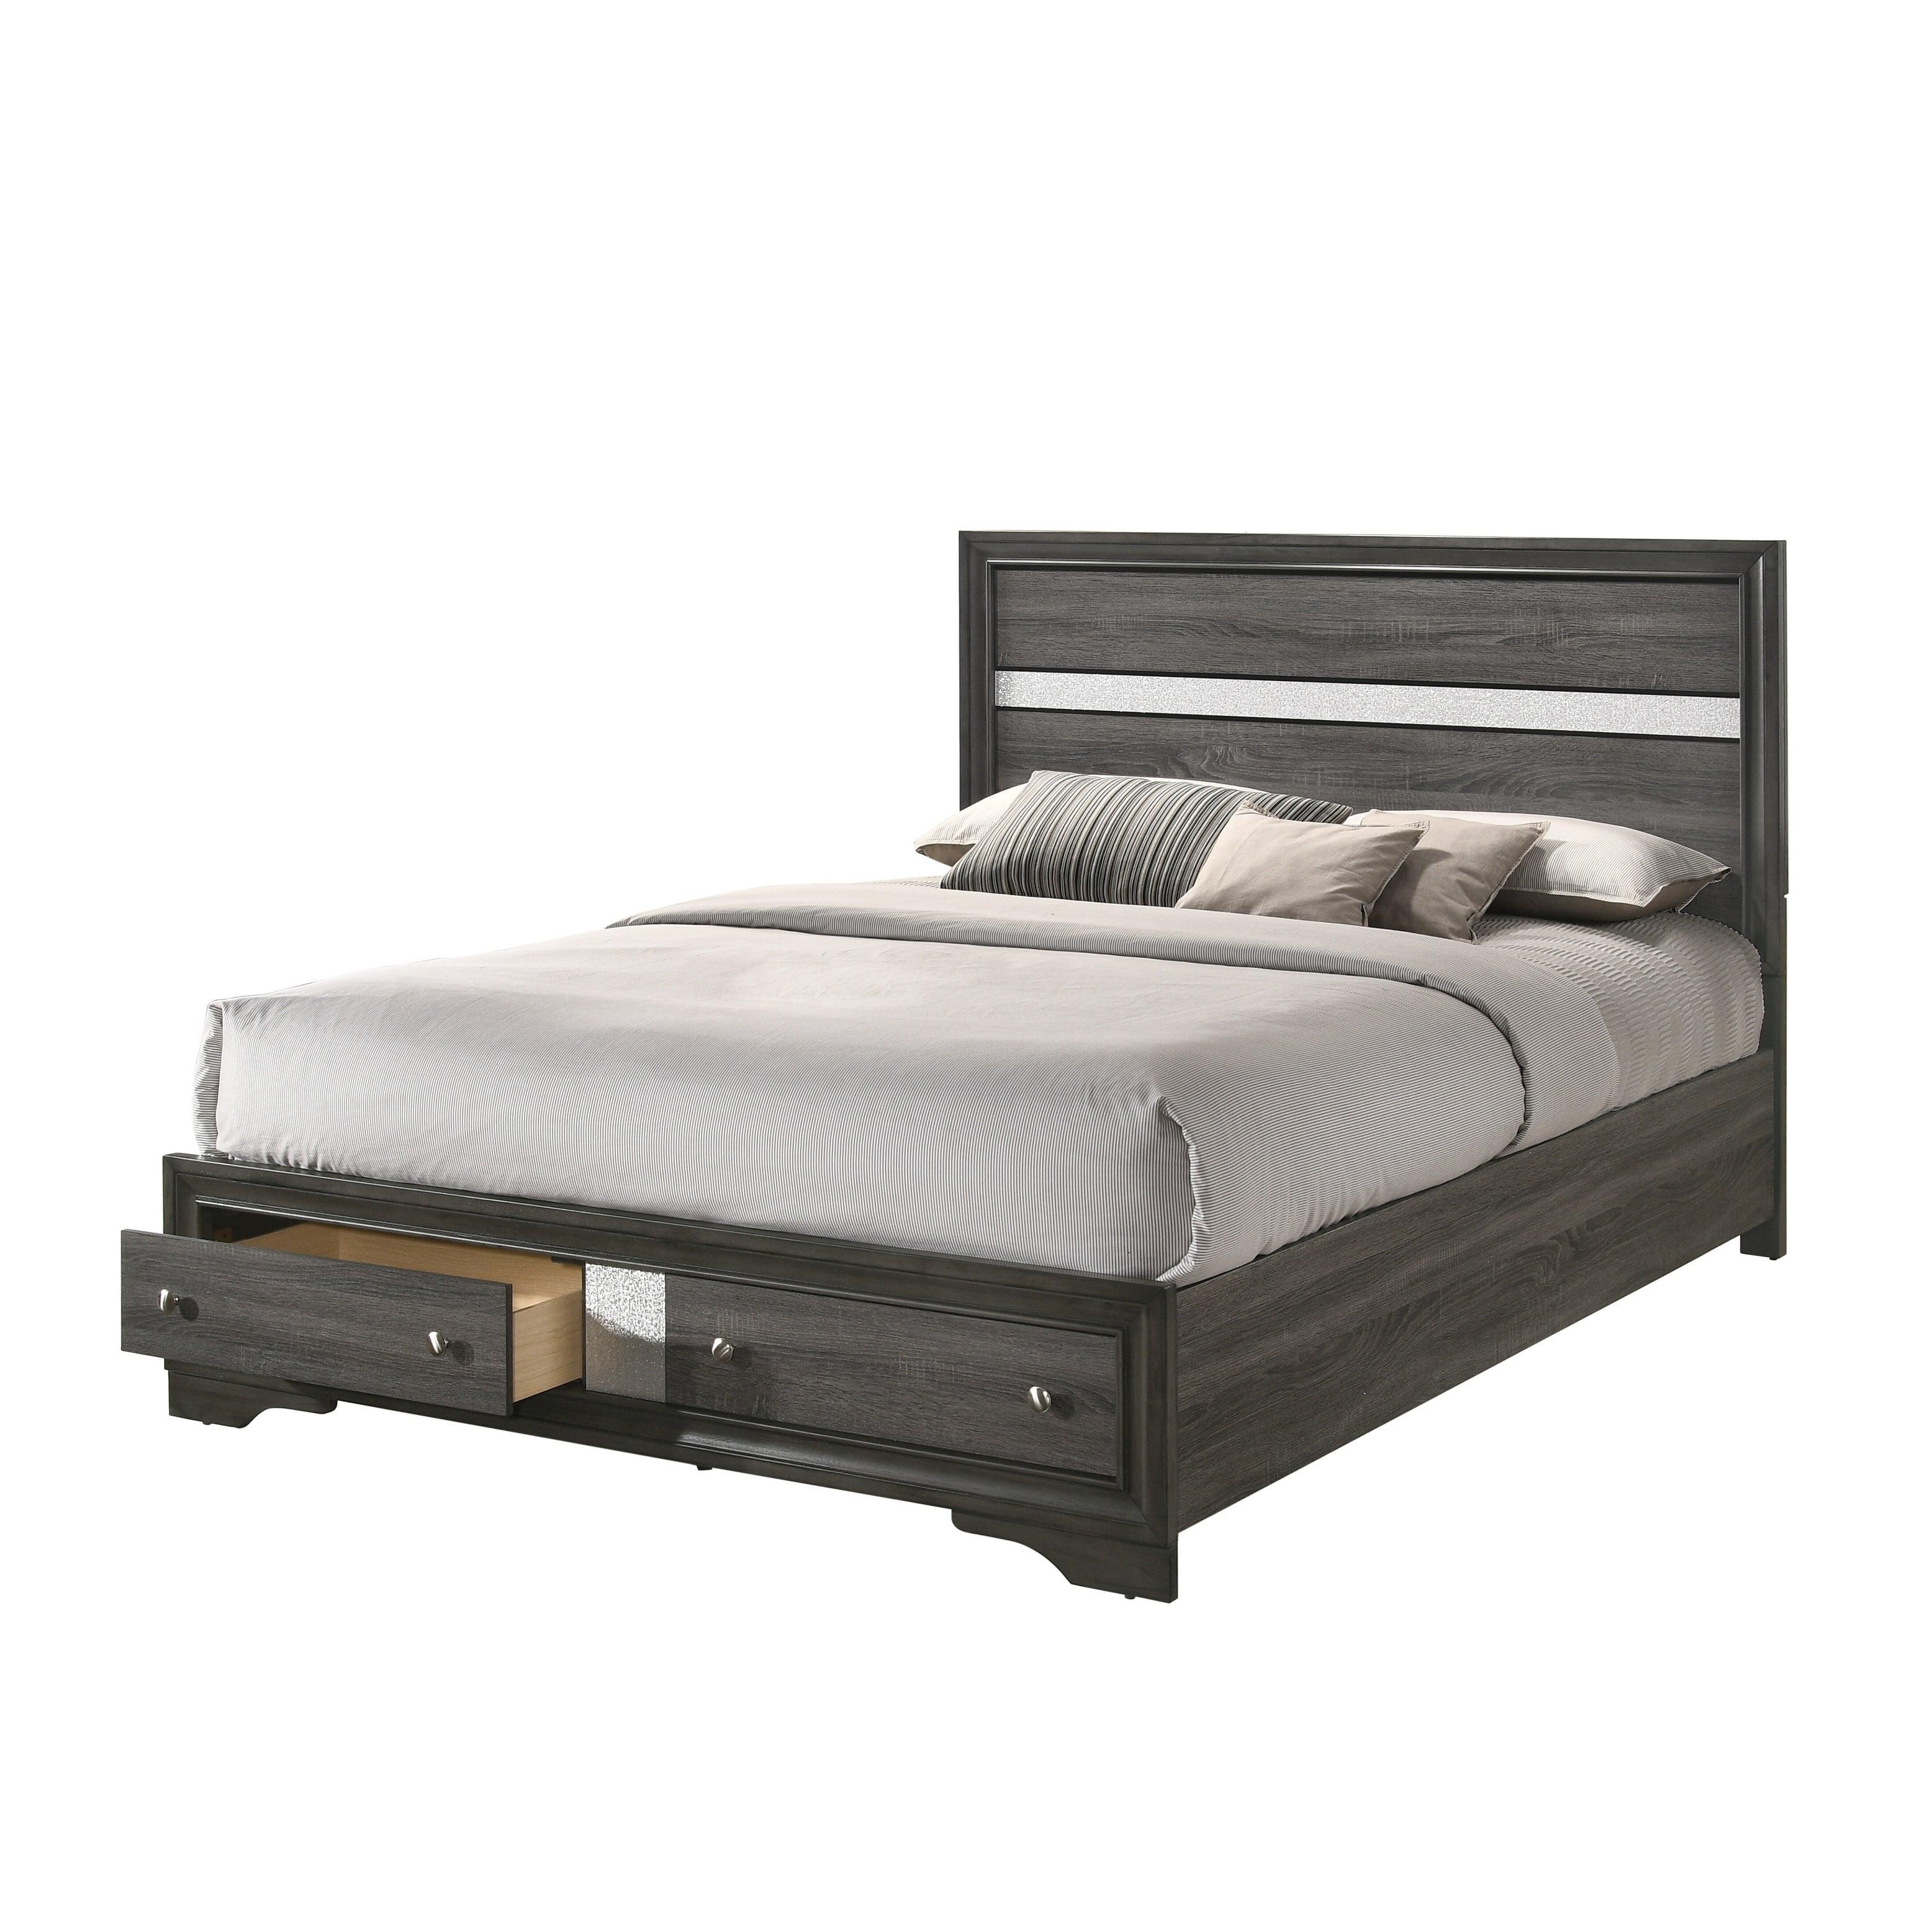 Contemporary, Modern Storage Bed Naima-25970Q 25970Q in Silver, Gray Matte Lacquer